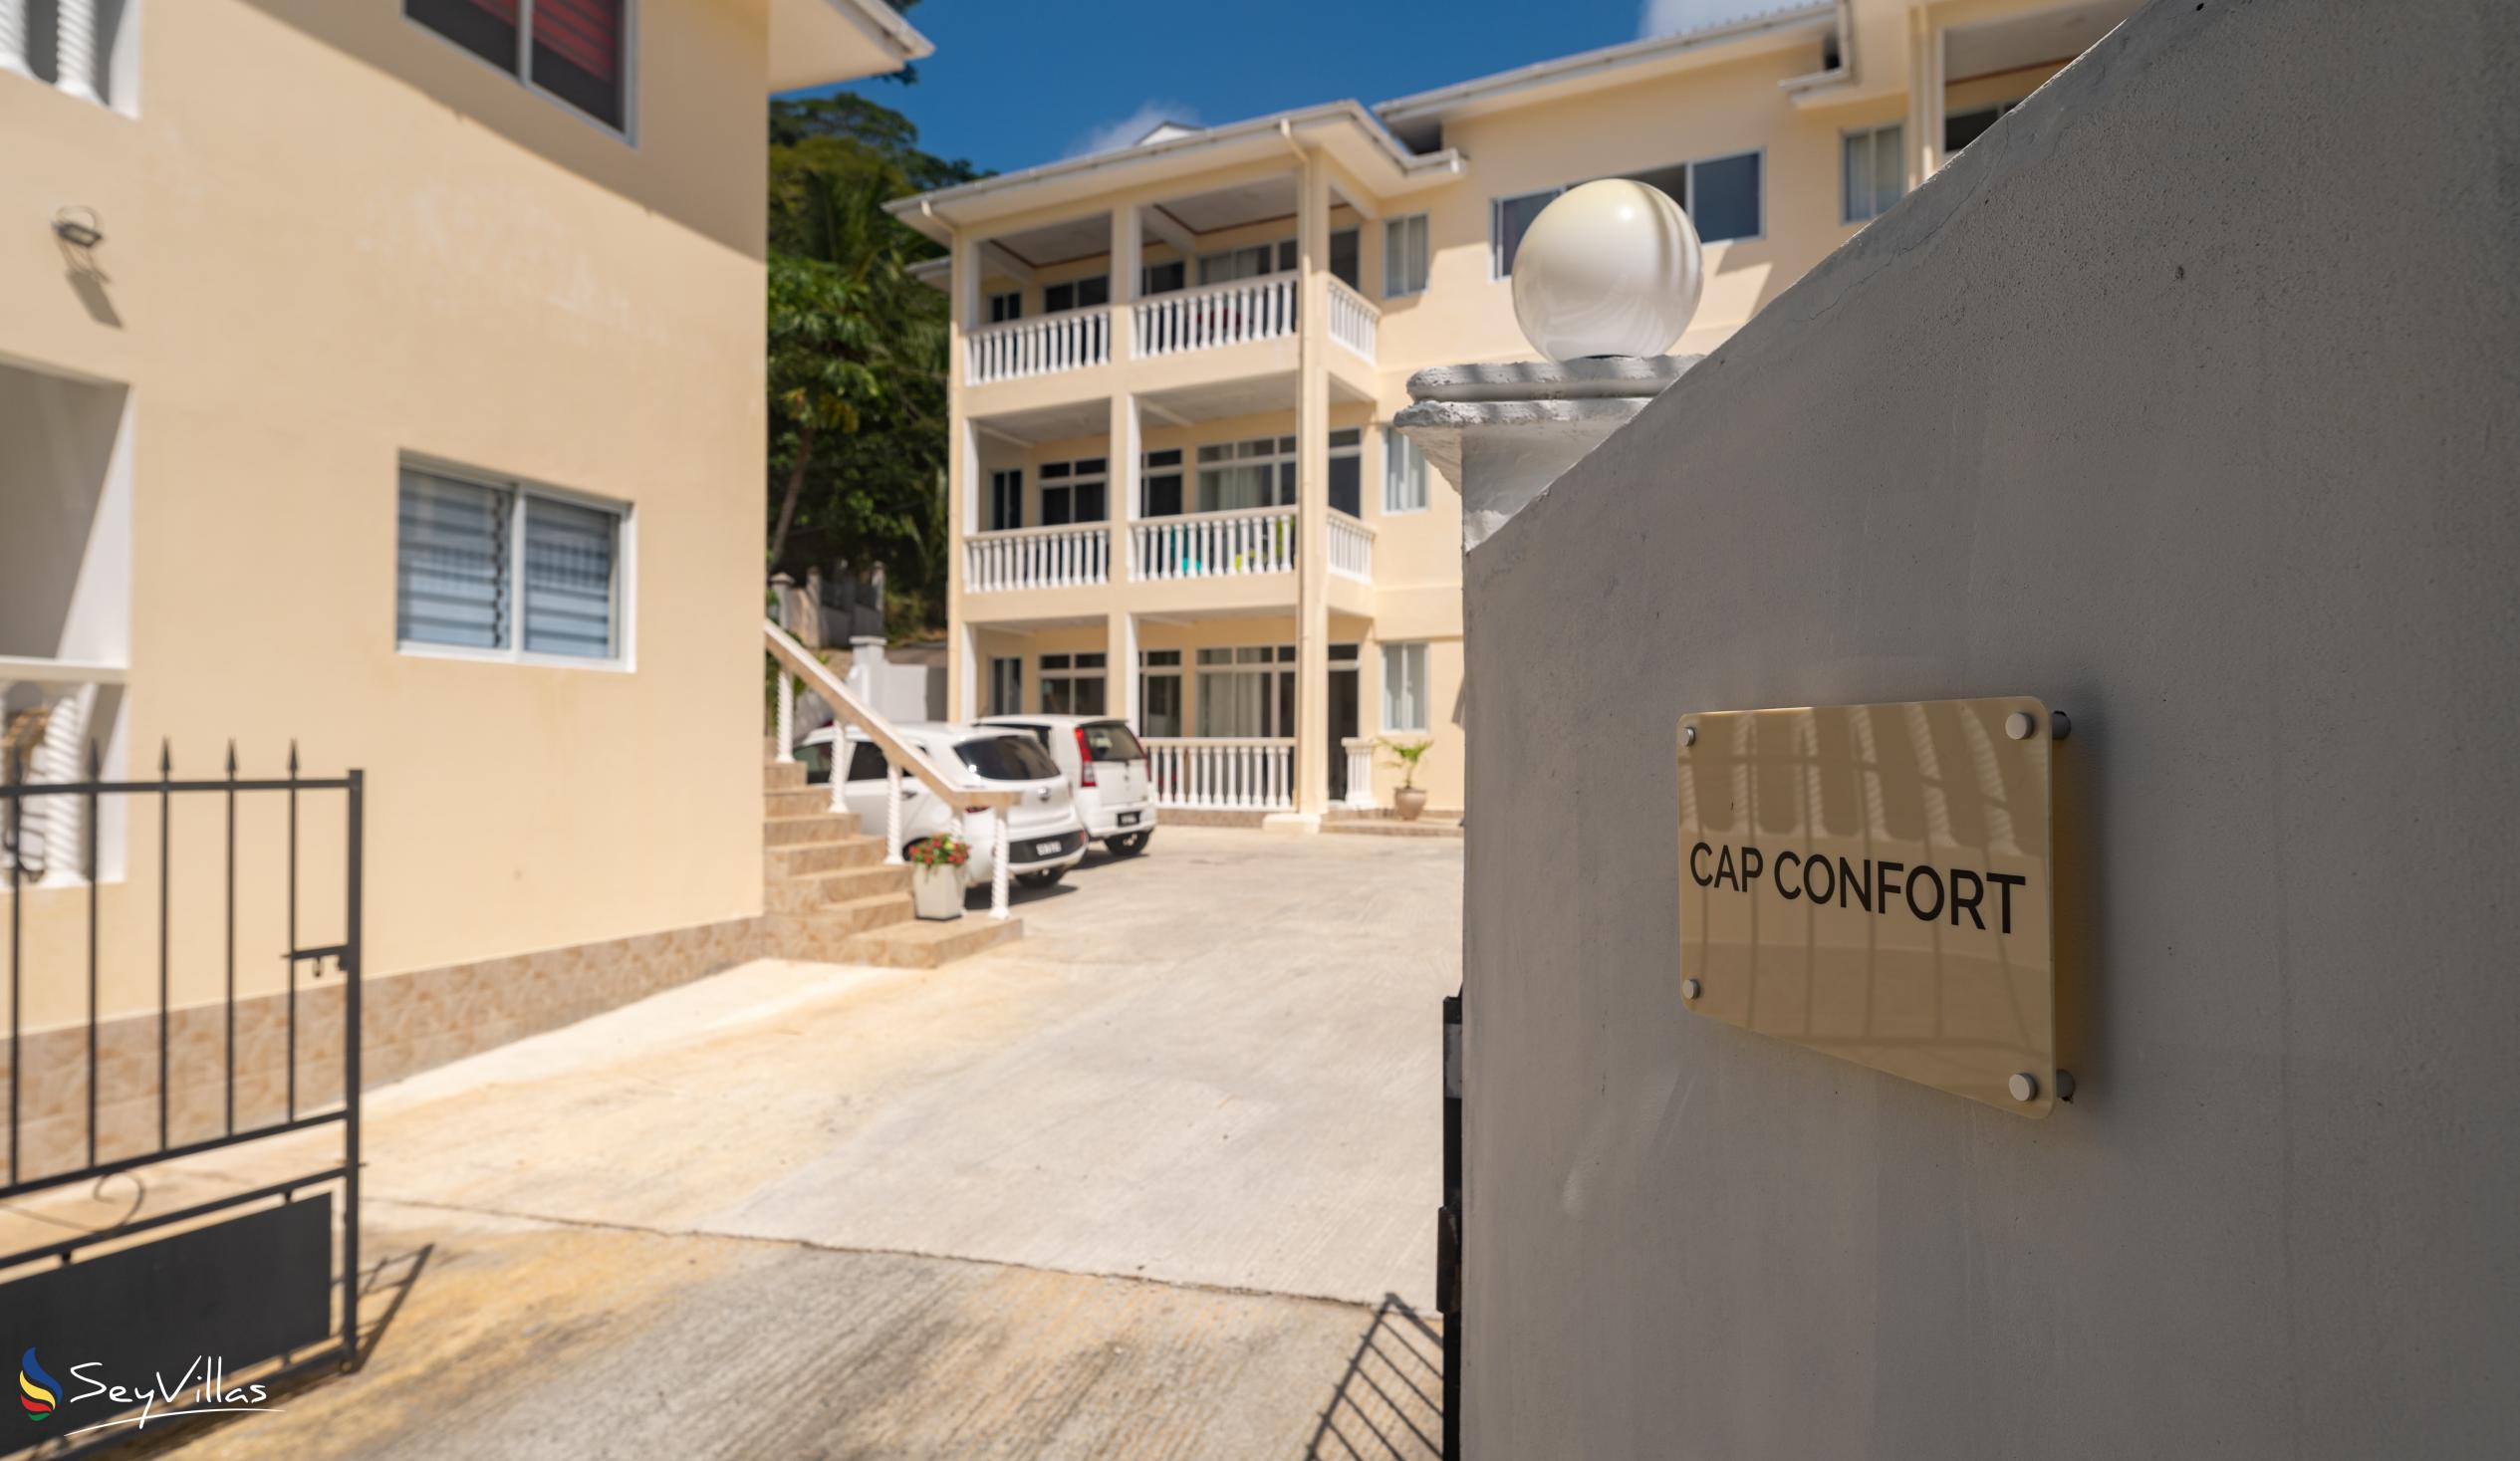 Foto 18: Cap Confort - Aussenbereich - Mahé (Seychellen)